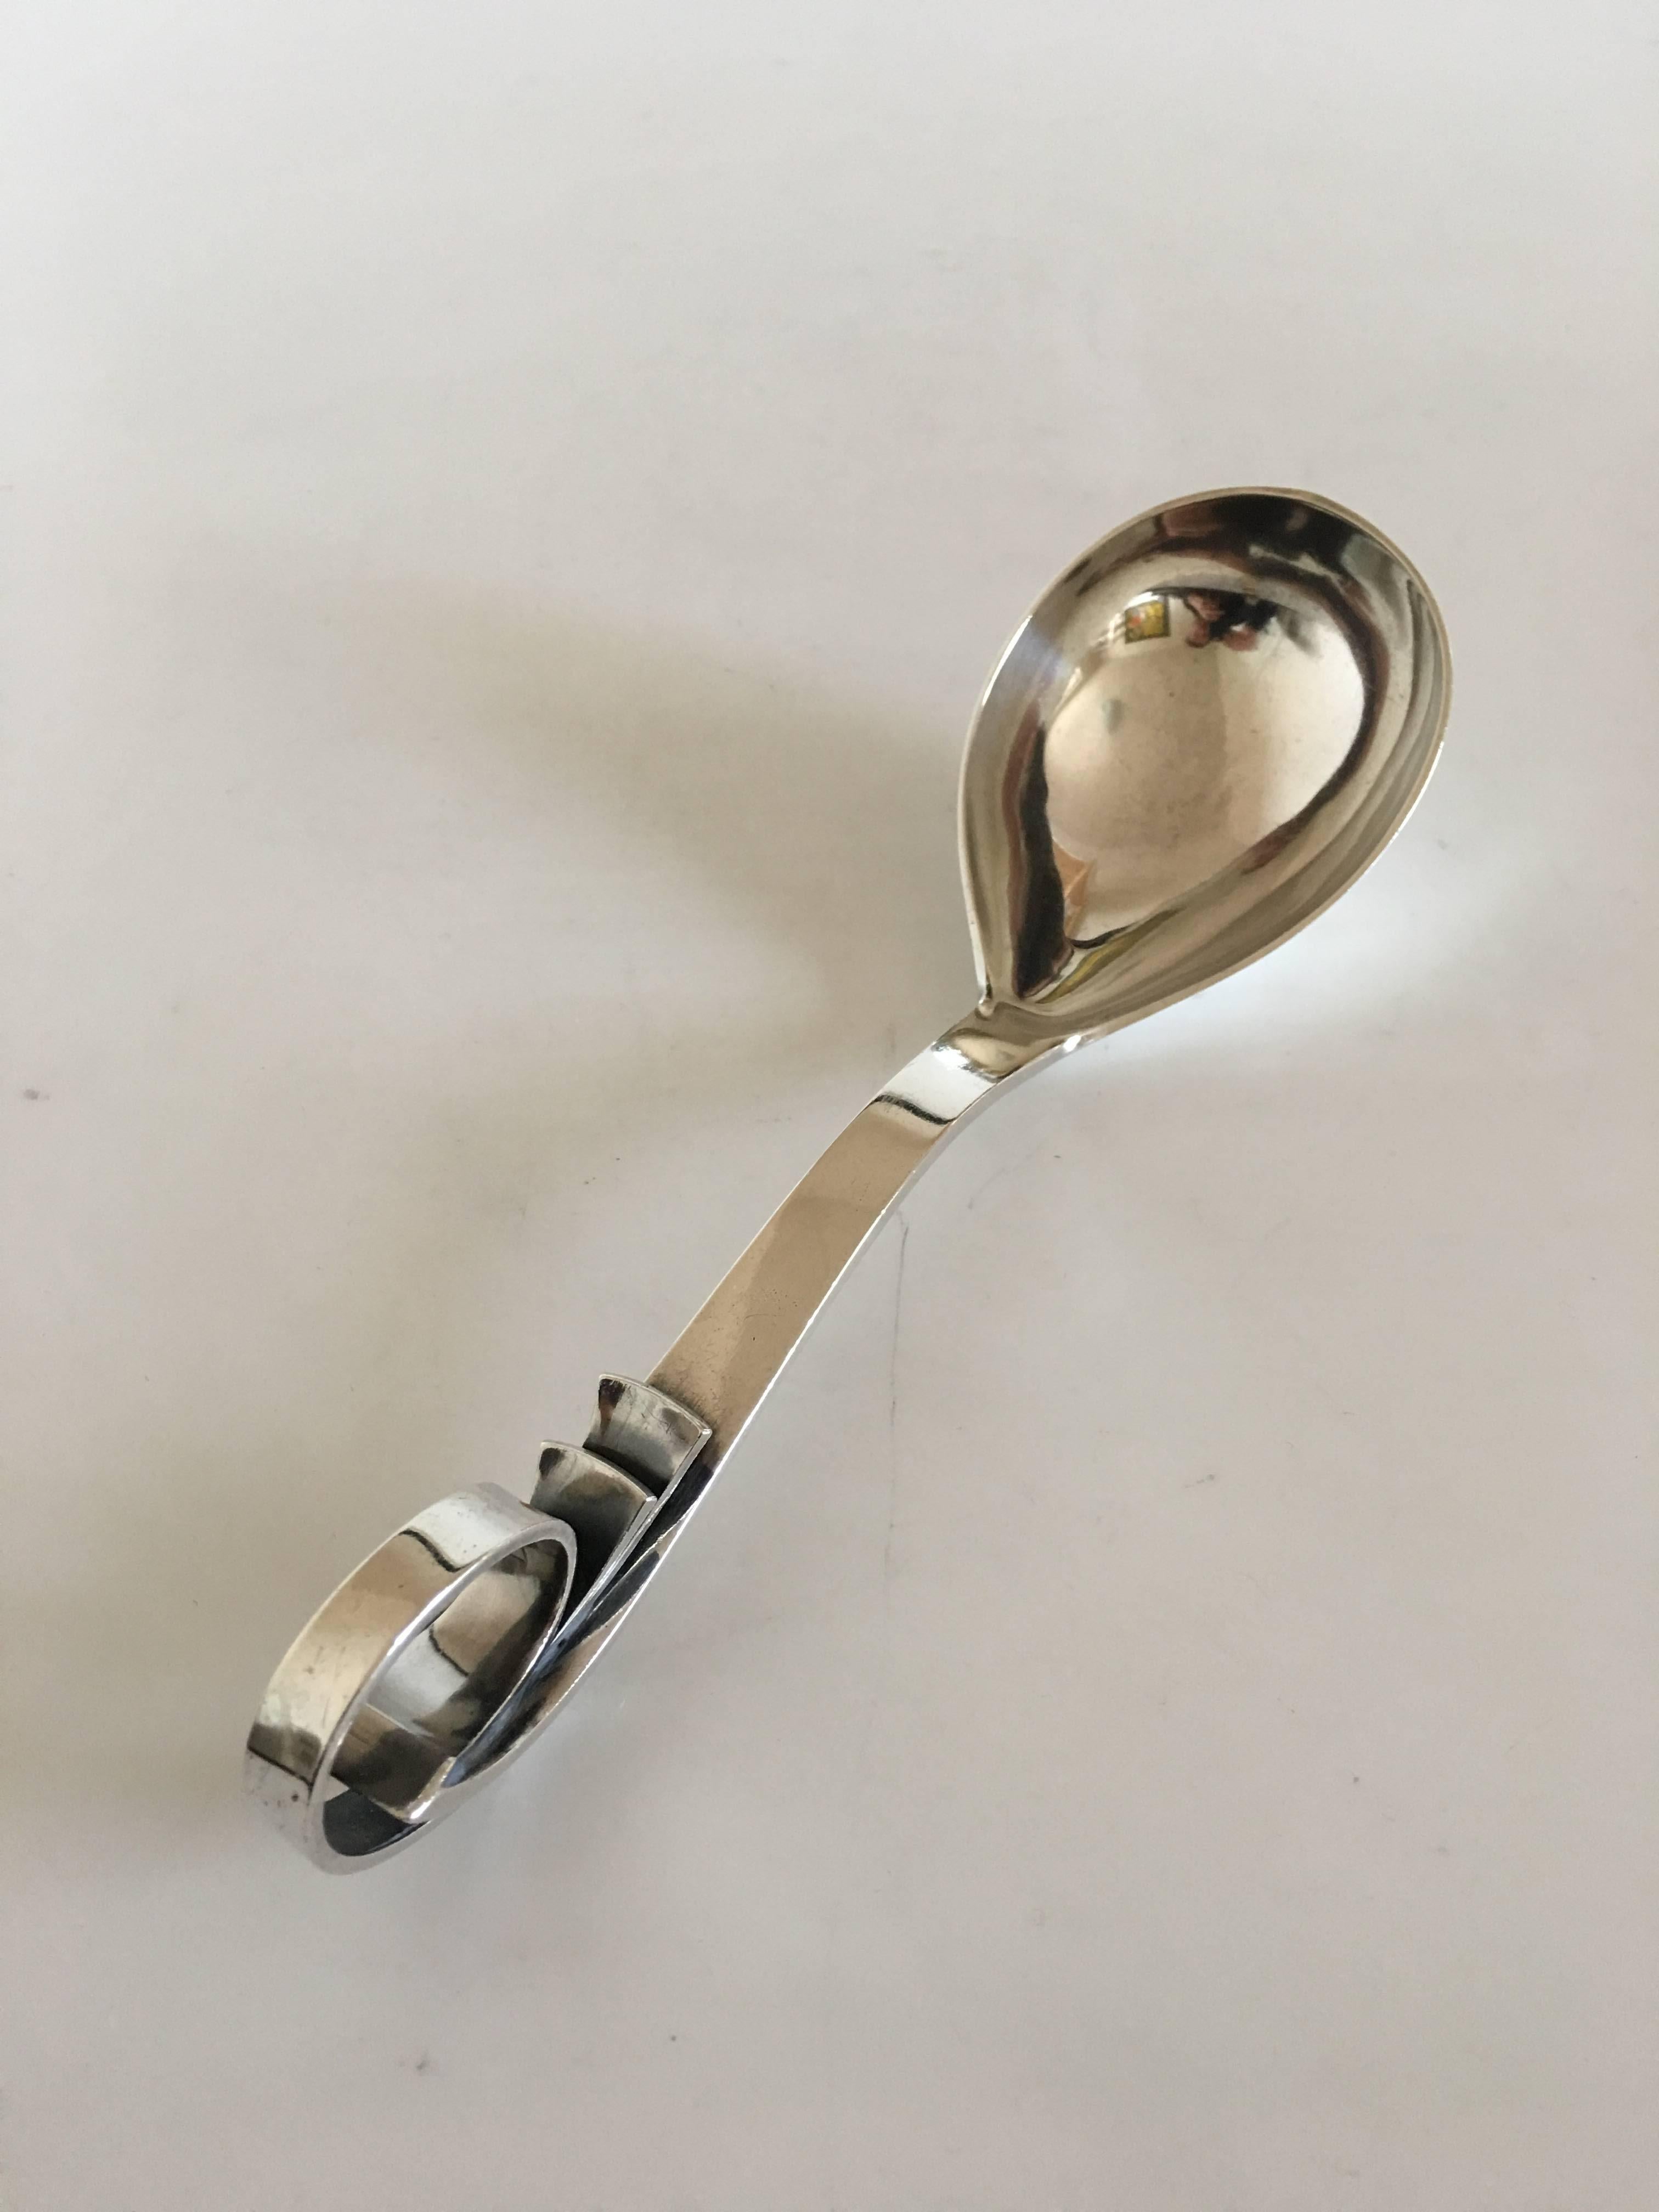 Hans Hansen sterling silver ornamental serving spoon / Ladle from 1934. 22.5 cm L (8 55/64